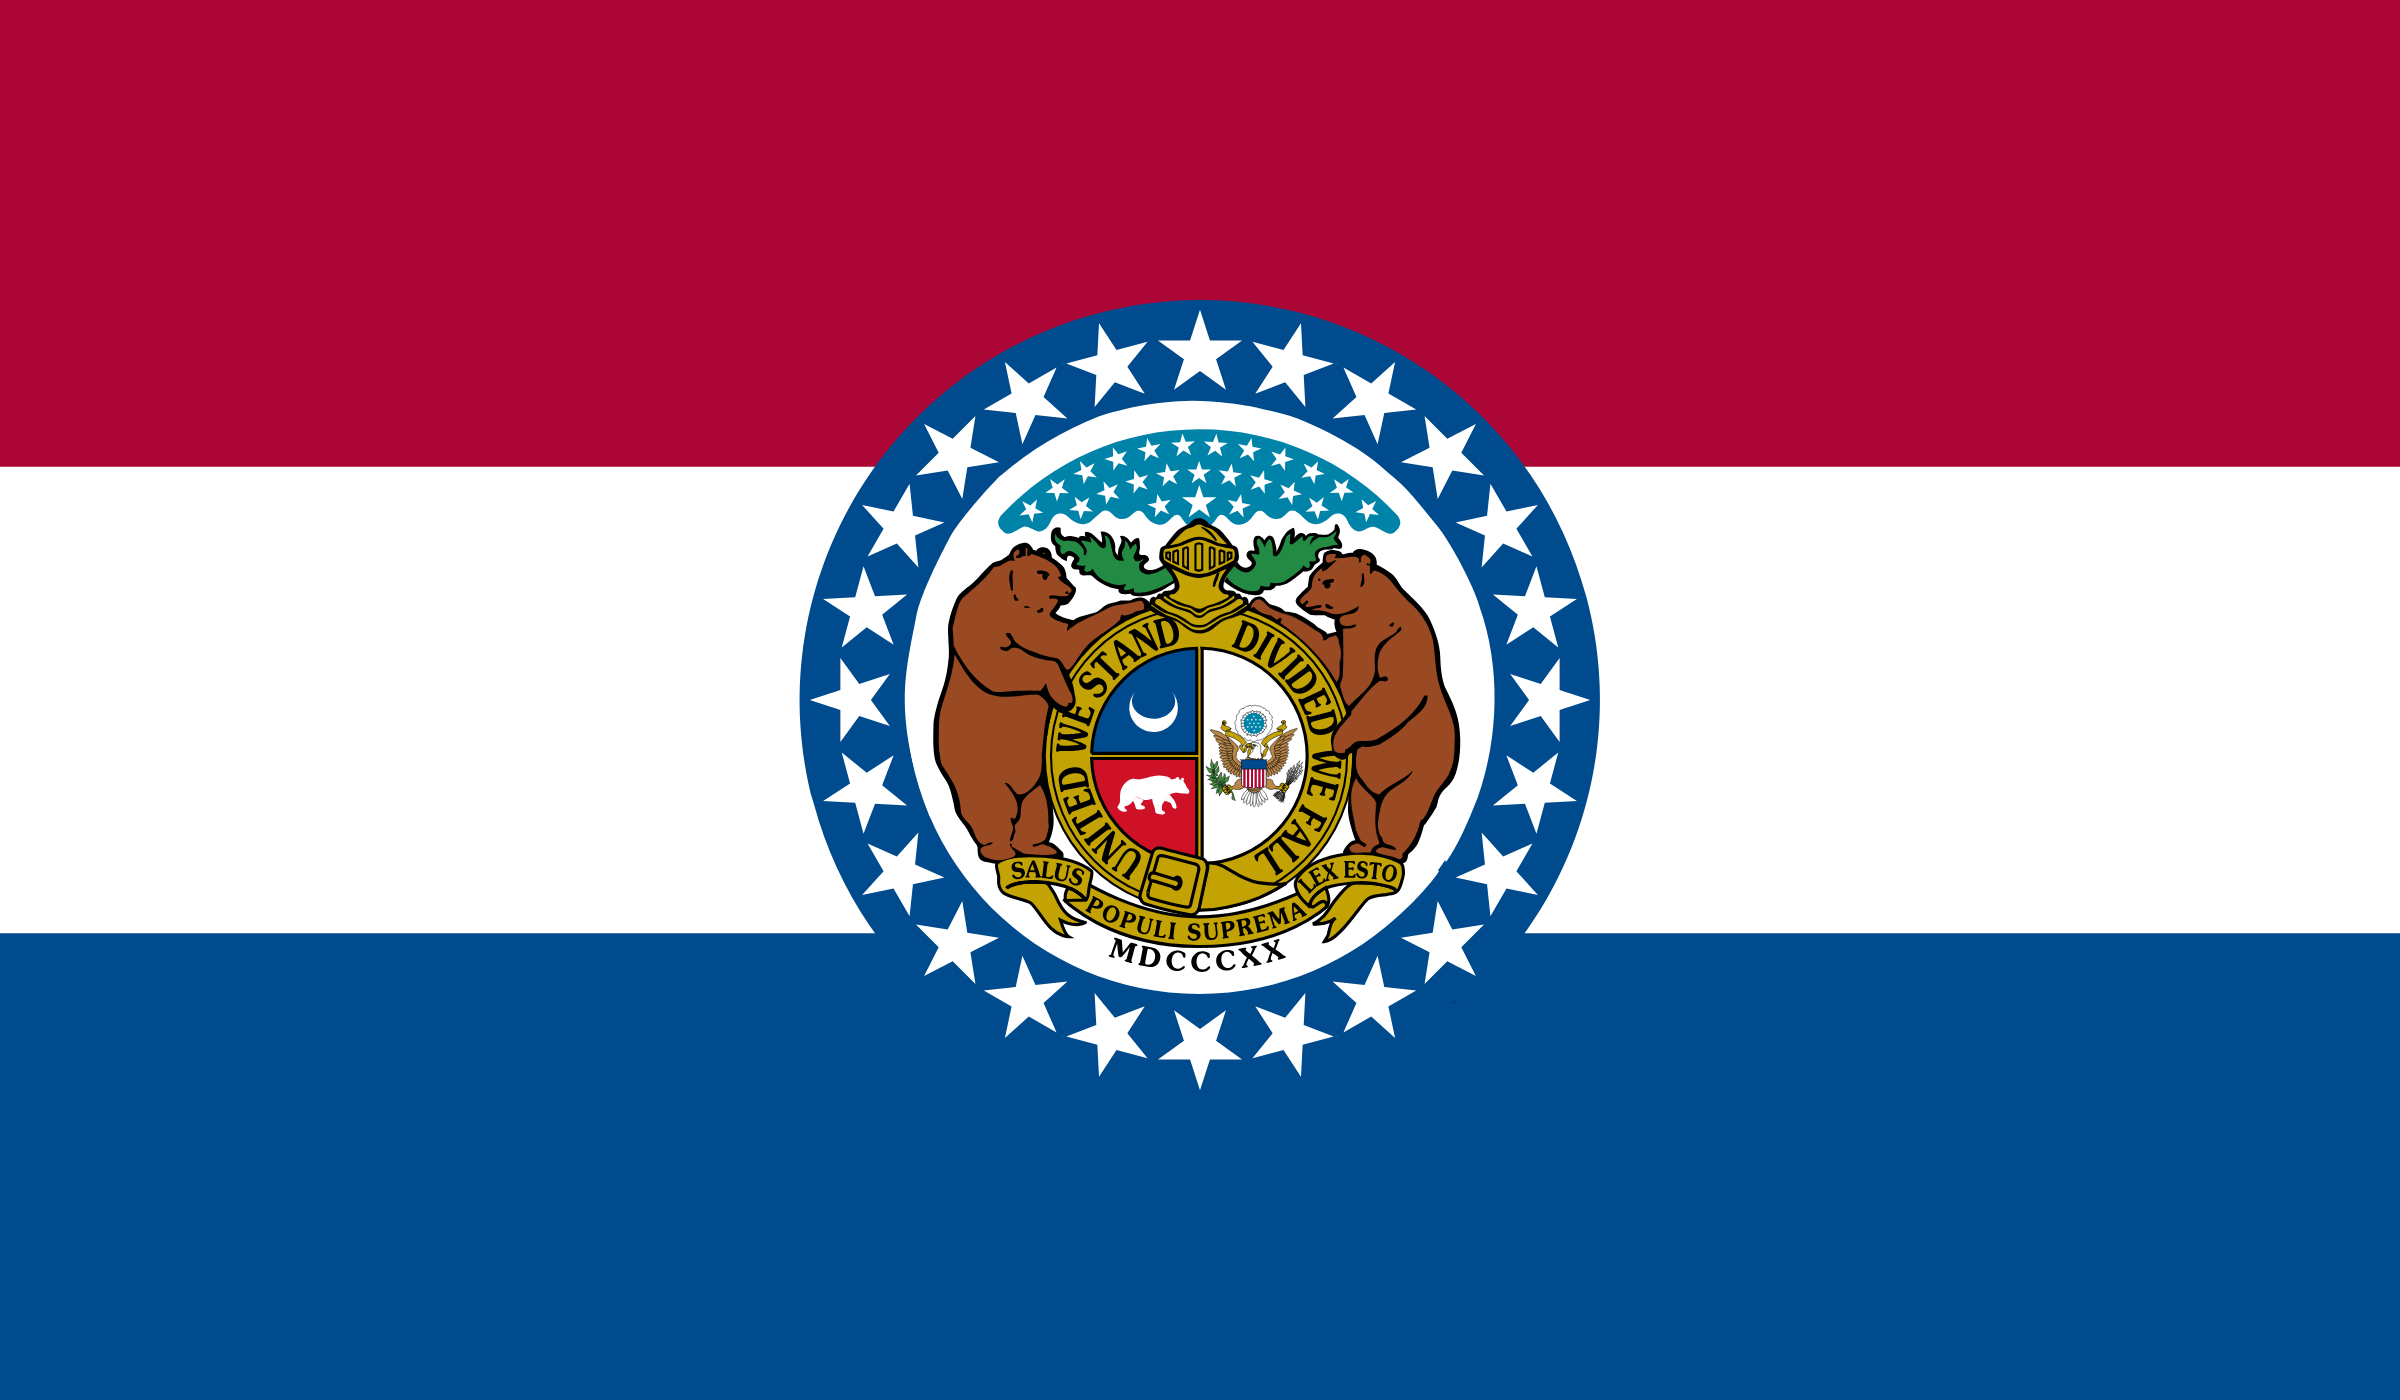 Missouri State Flag